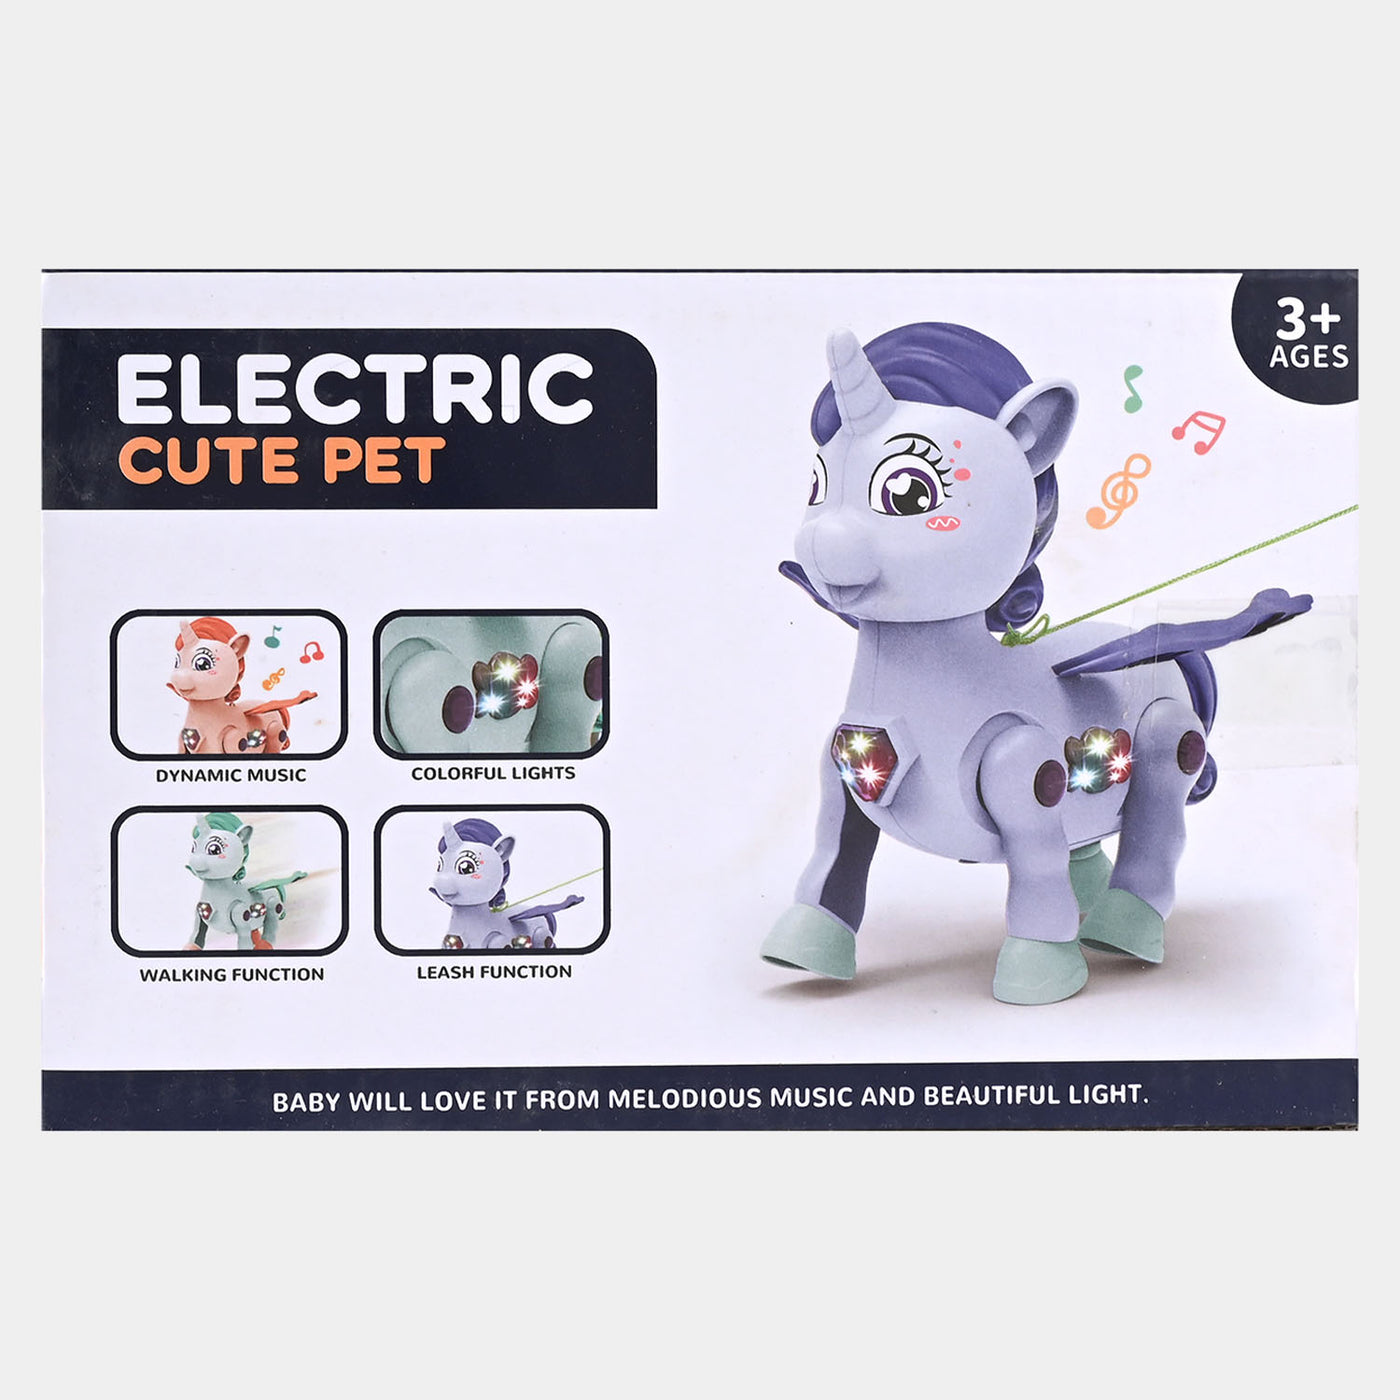 Dancing Music Lighting Cute Pet Toy For Kids